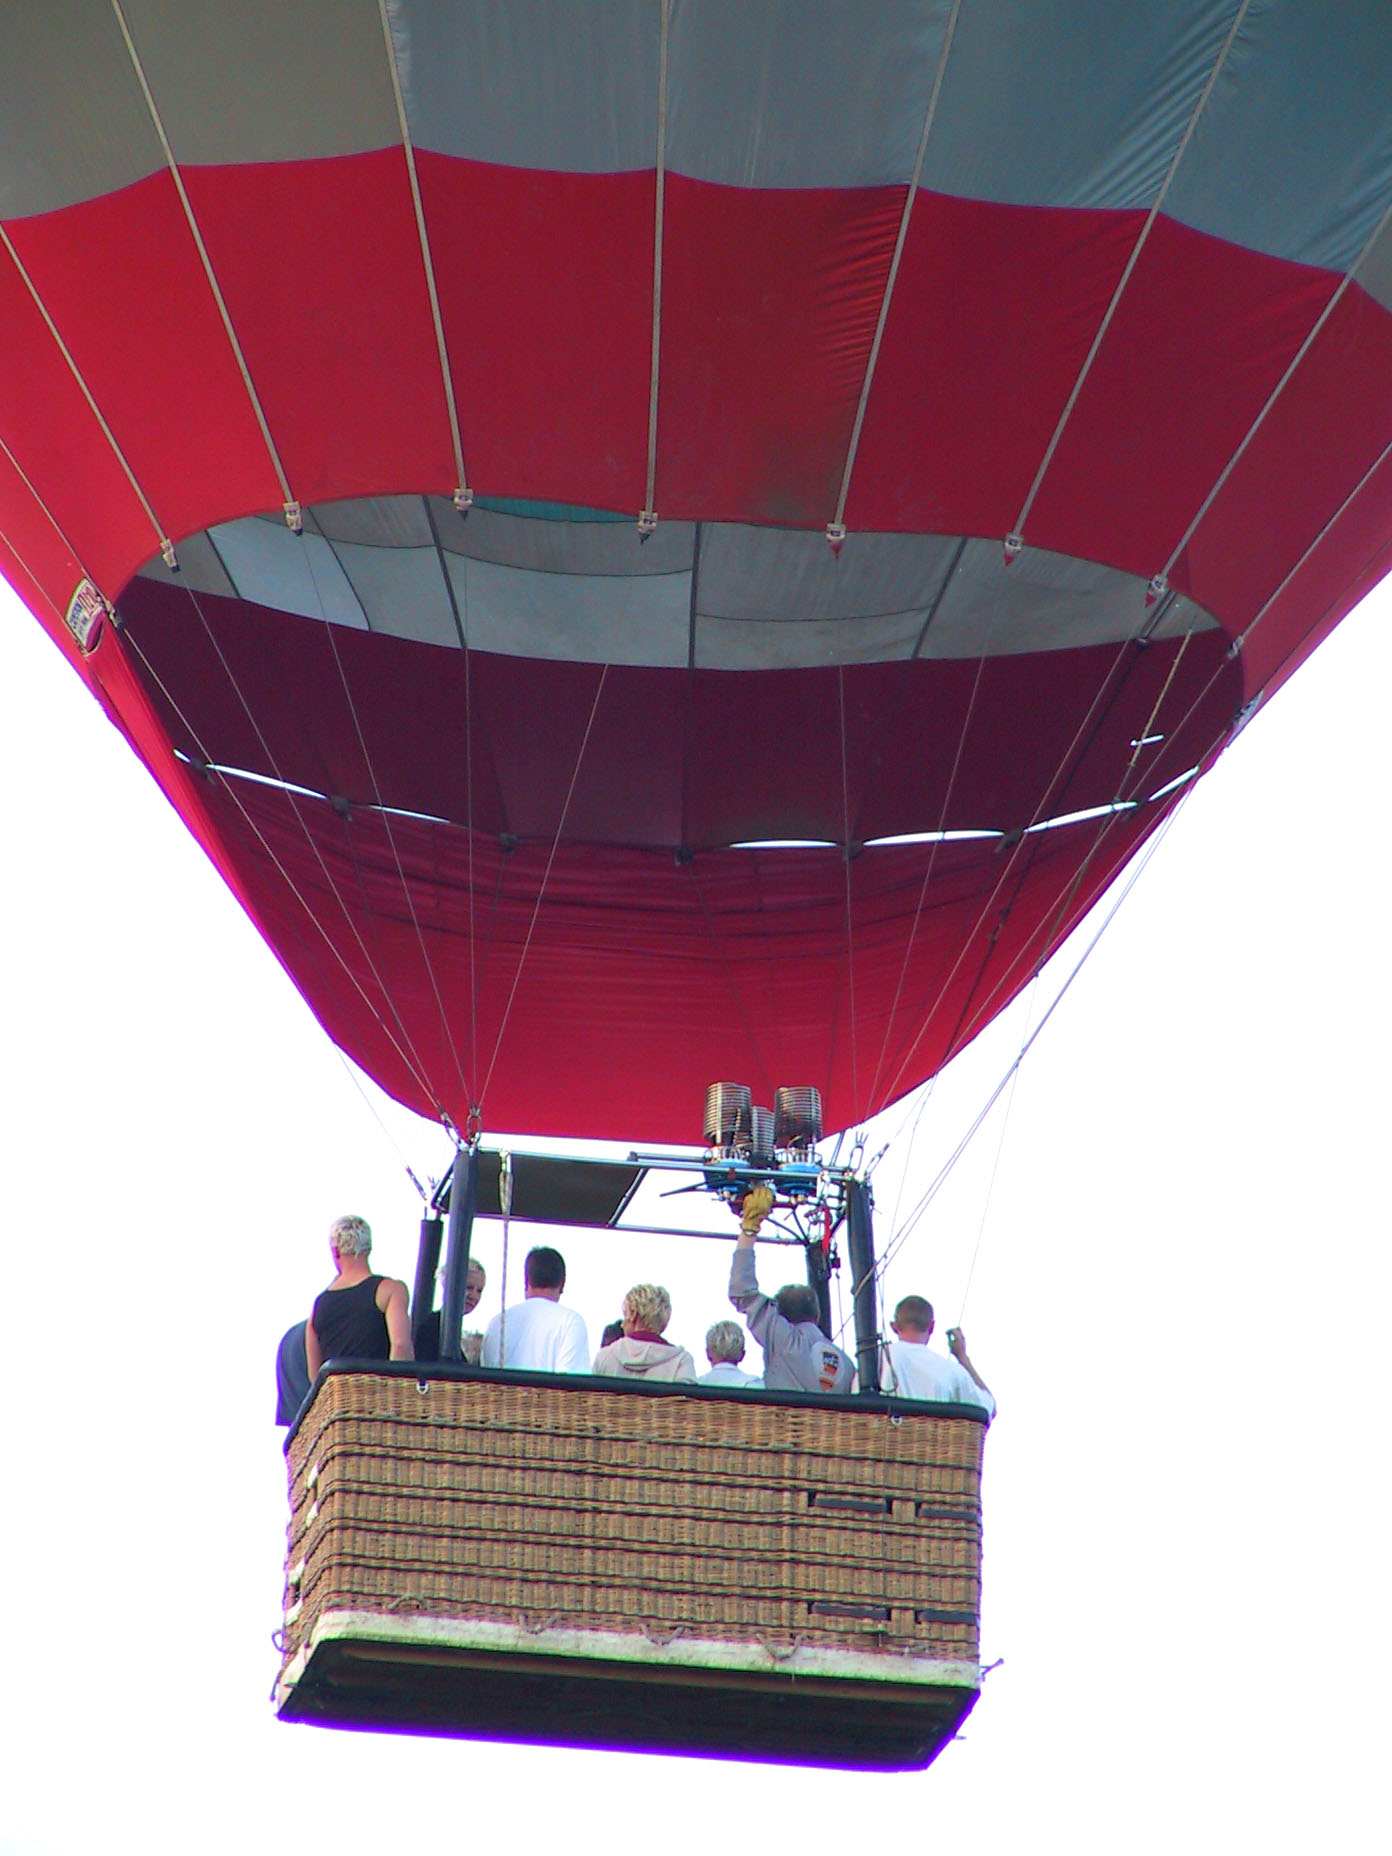 [Balloon ready for landing. JMJ.   Canon powershot Pro 90. Digital camera Canon powershot Pro 90]